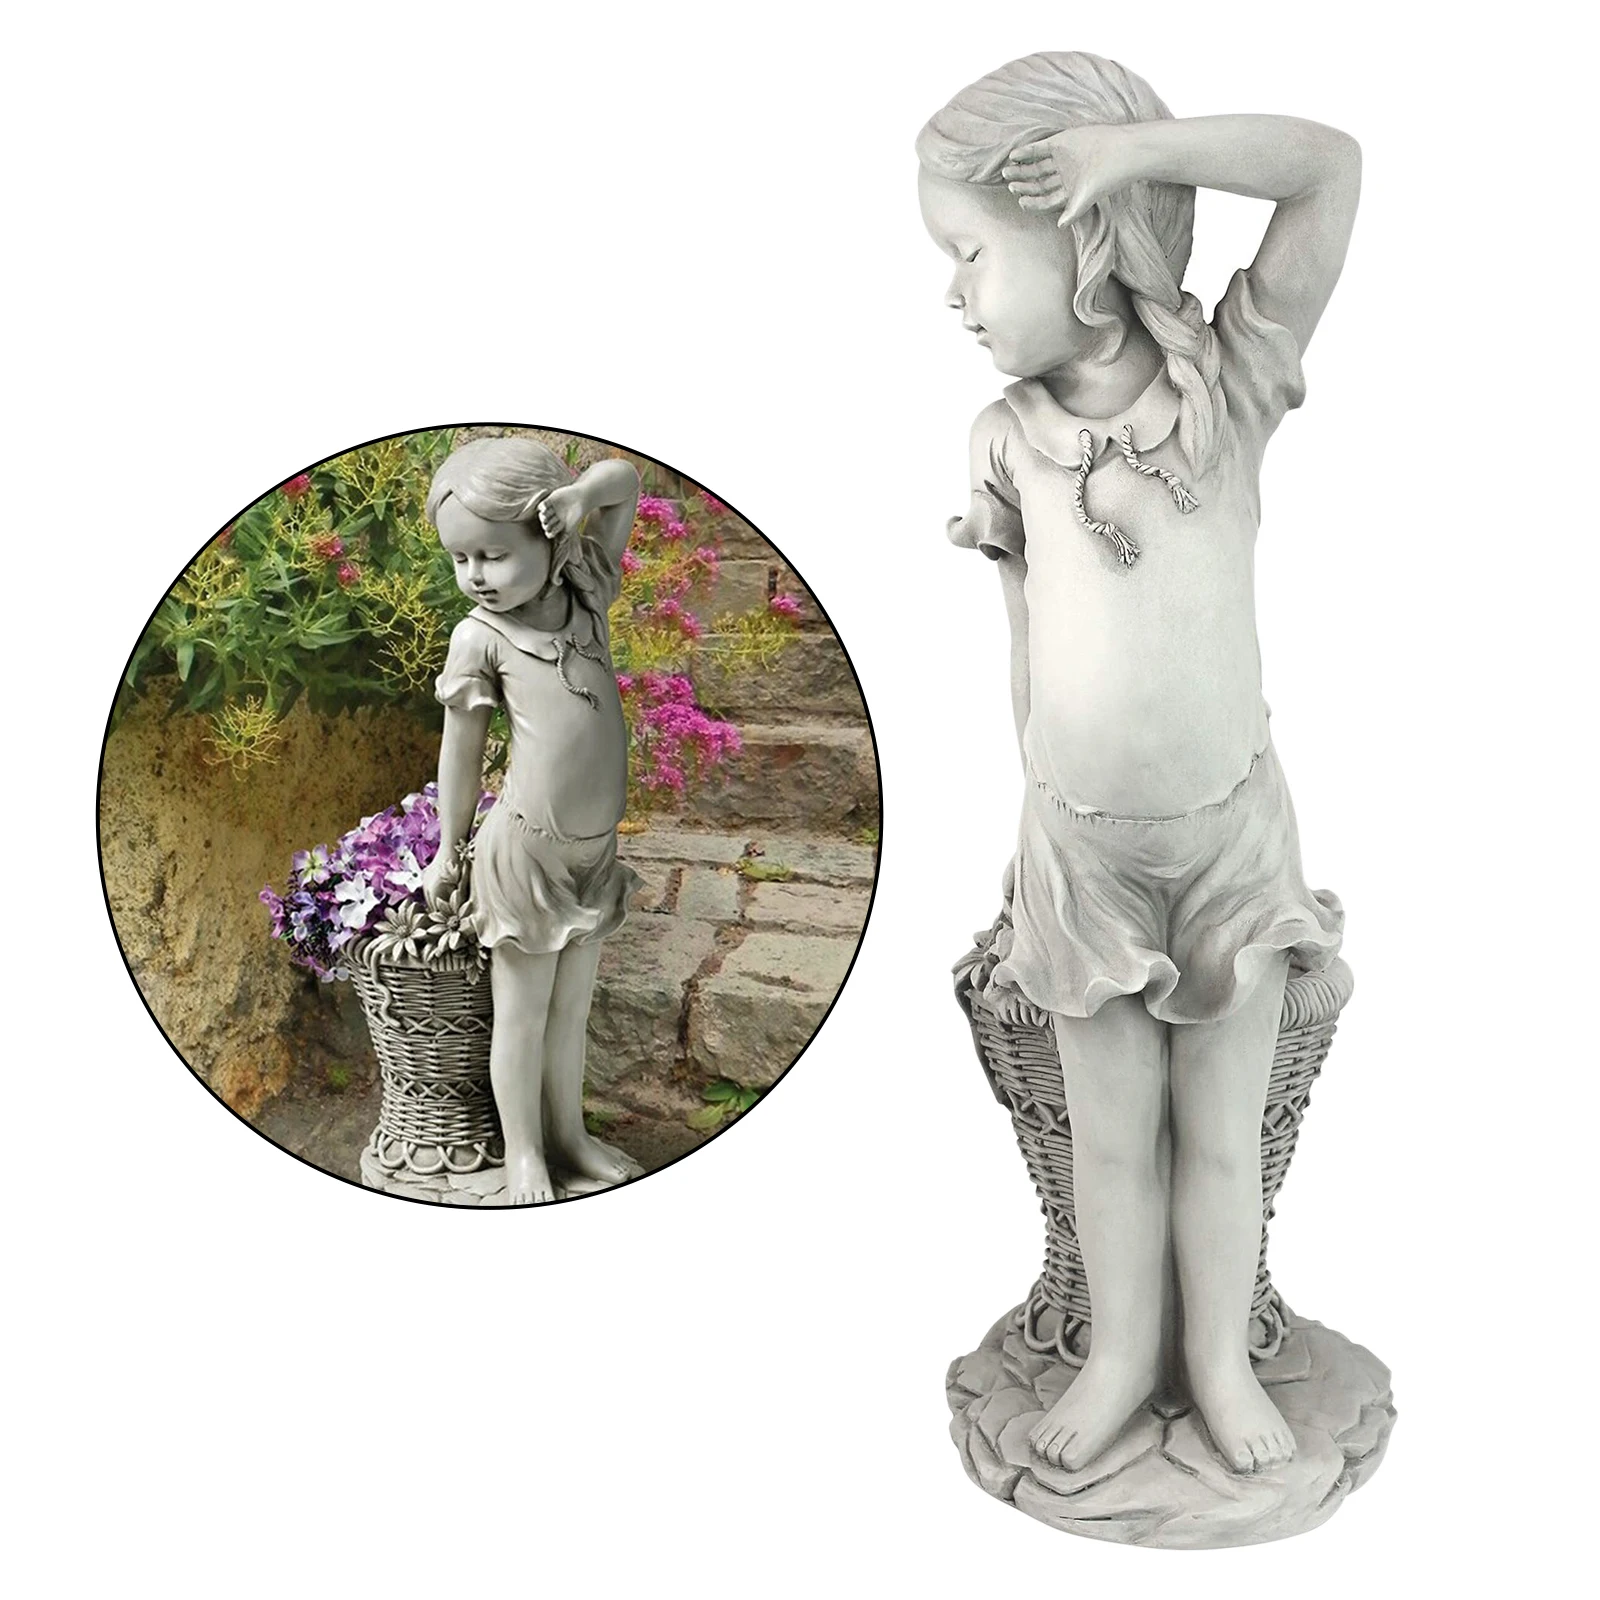 Flower Girl Statue Adorable Child Outdoor Sculpture Garden Yard Decor Ornament Antique Stone